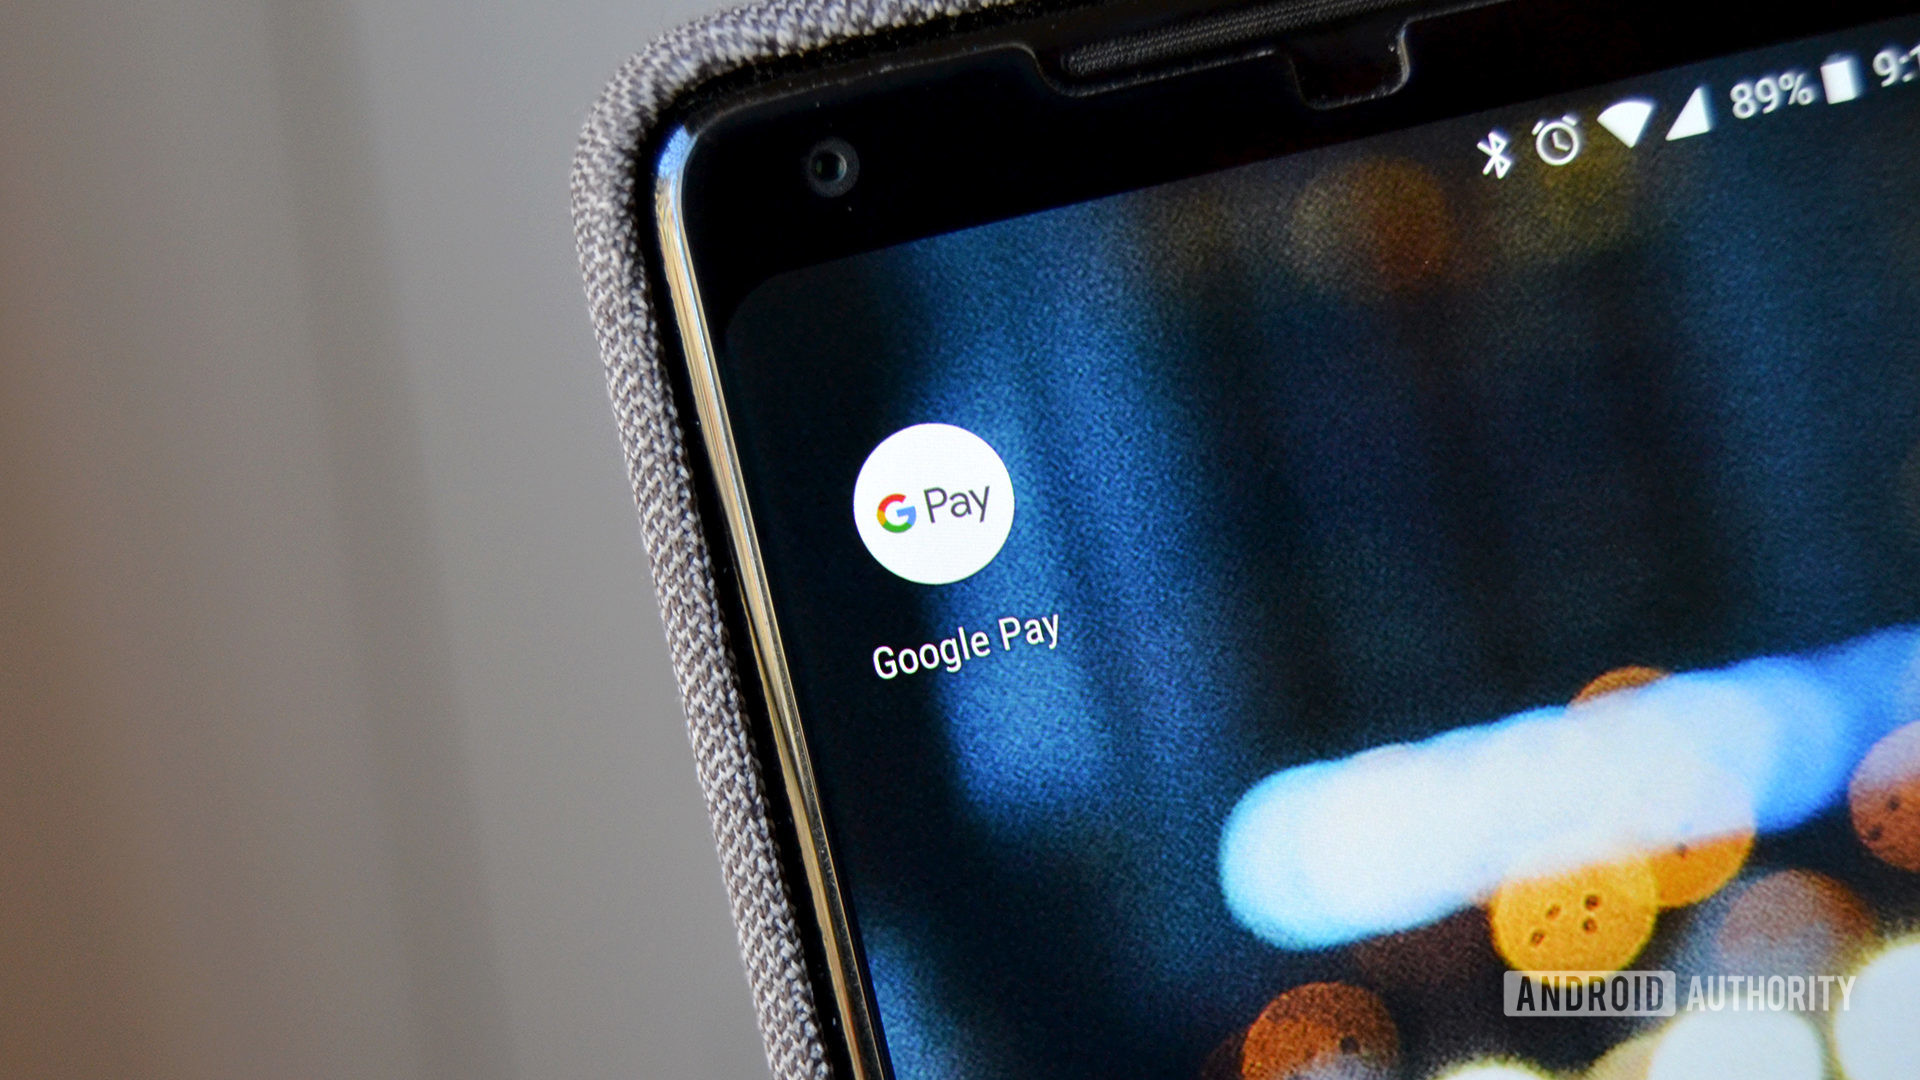 The Google Pay logo.